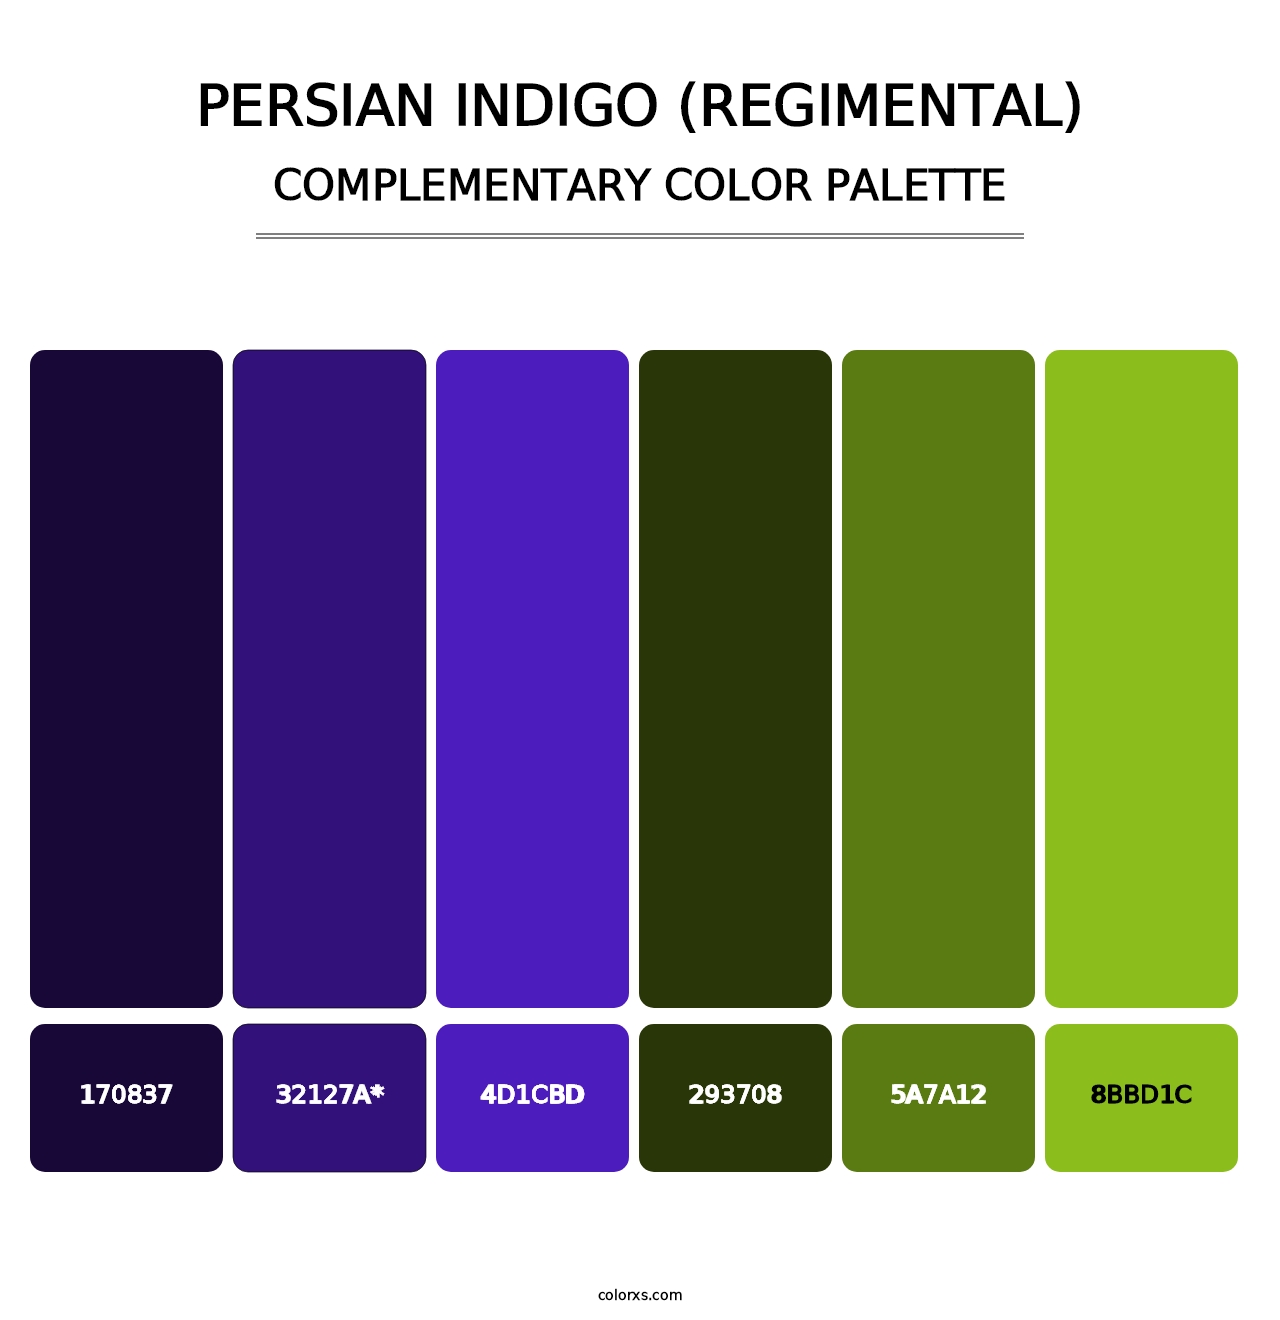 Persian Indigo (Regimental) - Complementary Color Palette